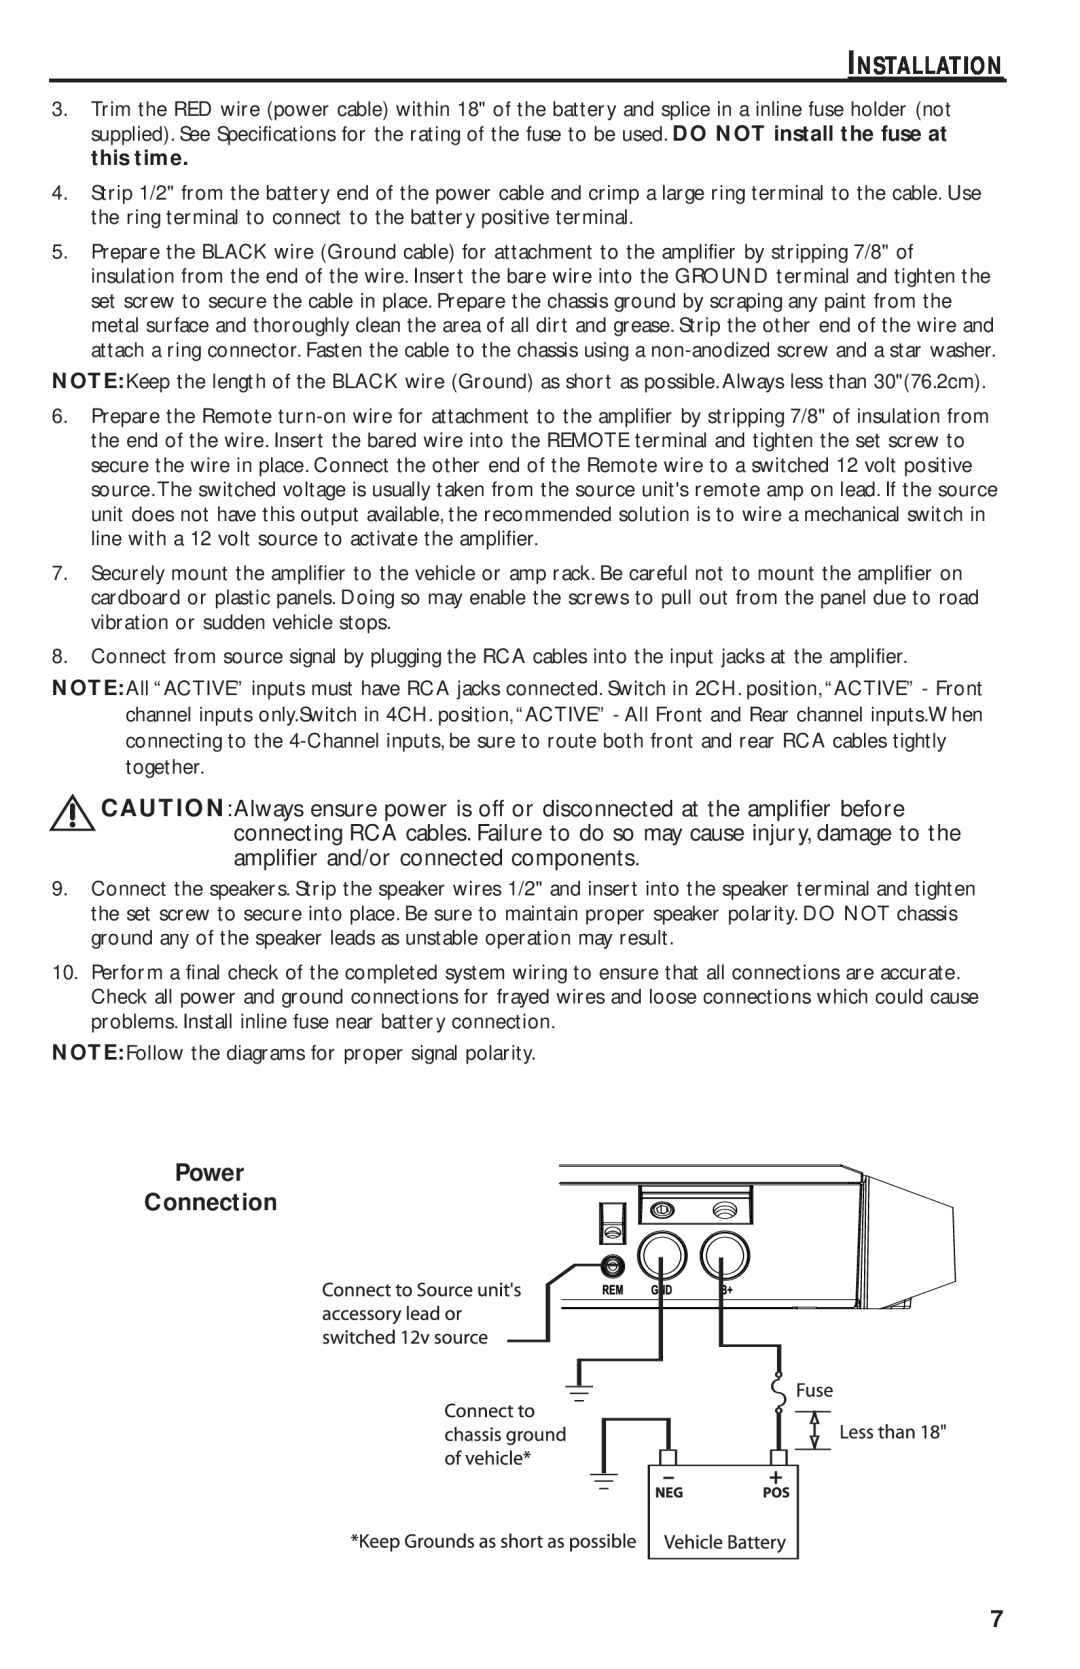 Rockford Fosgate T1000-4 manual Installation, Power Connection 